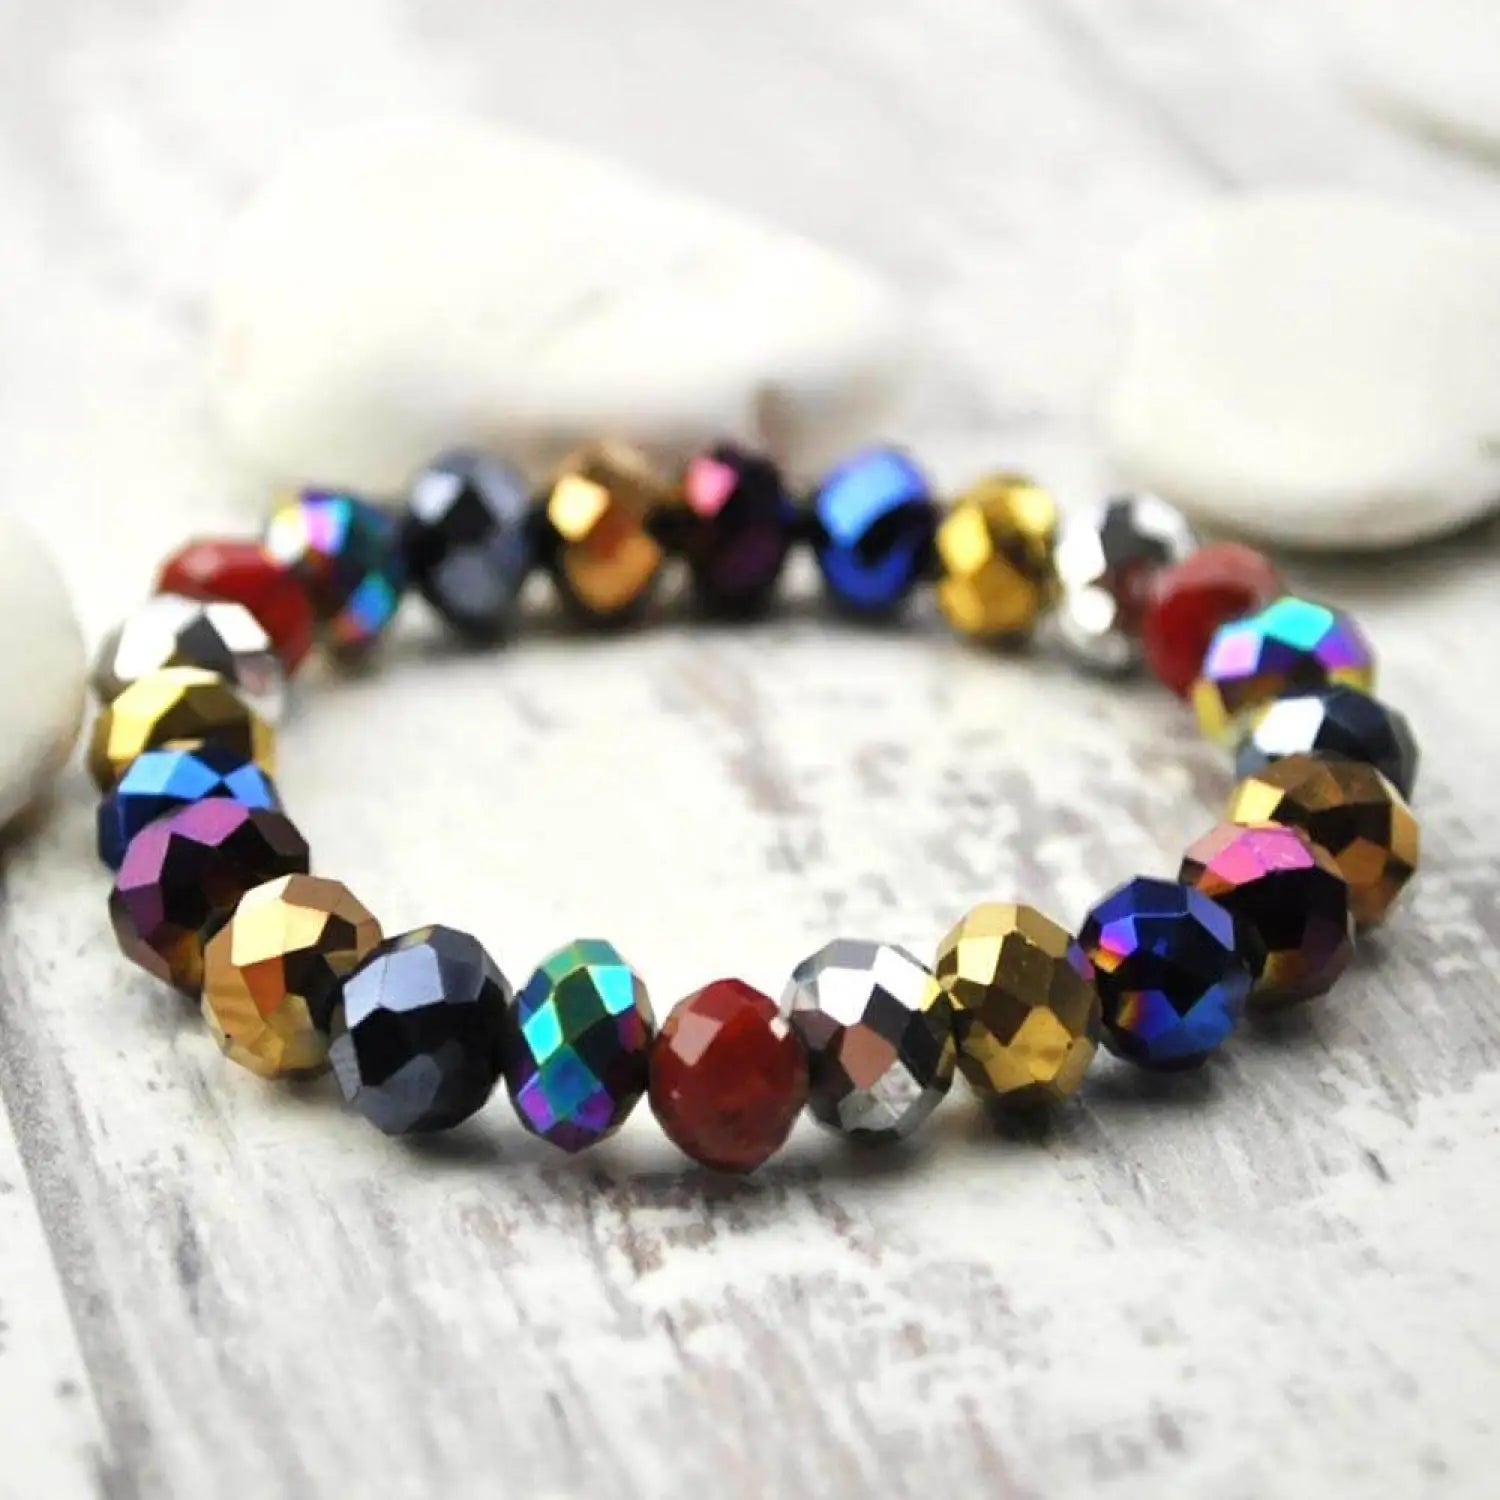 Multi-colour metallic beads bracelet on wooden surface